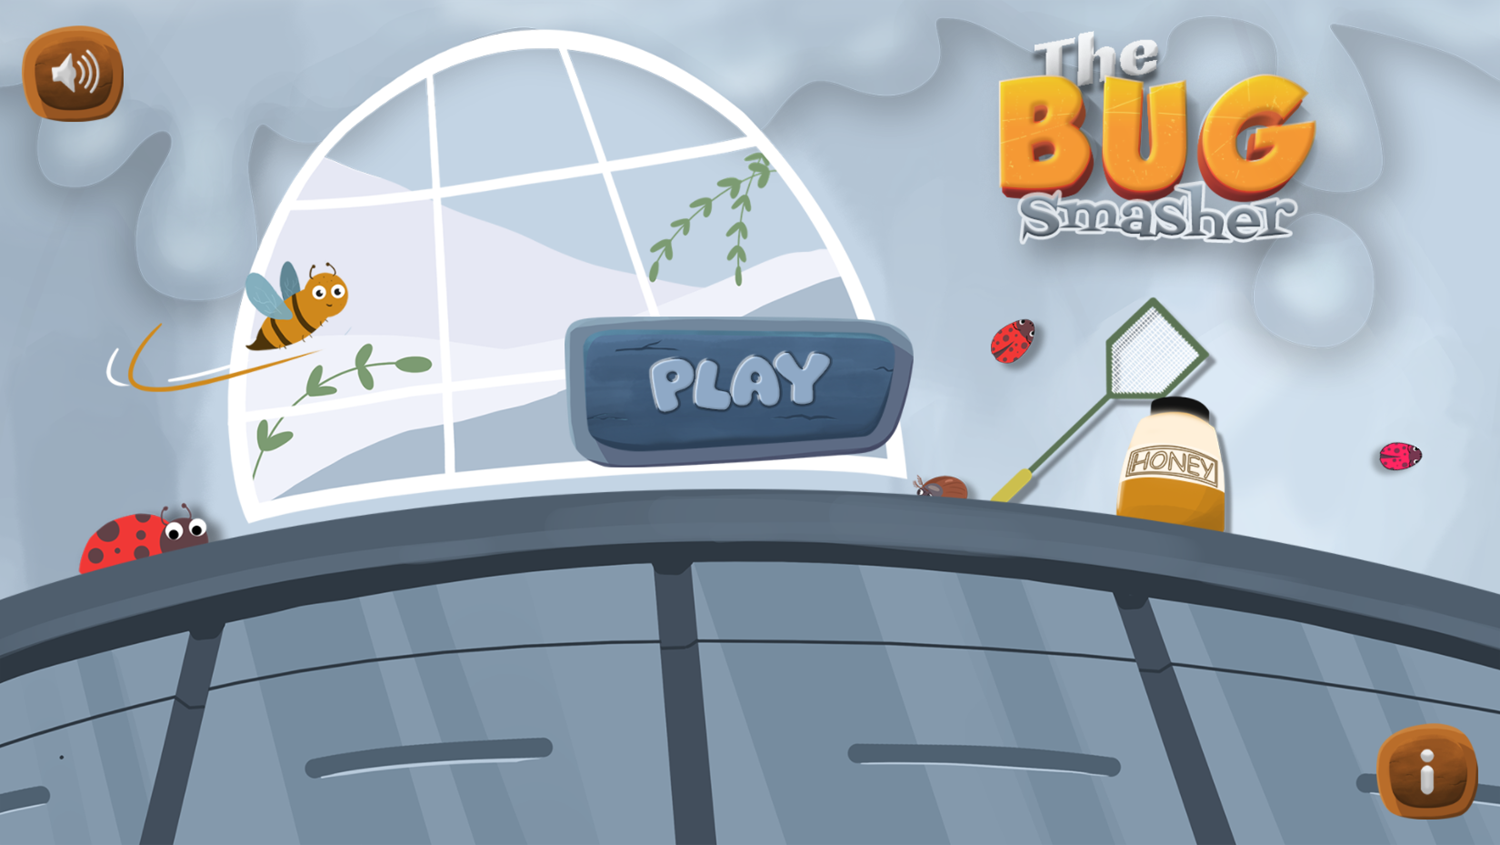 The Bug Smasher Game Welcome Screen Screenshot.